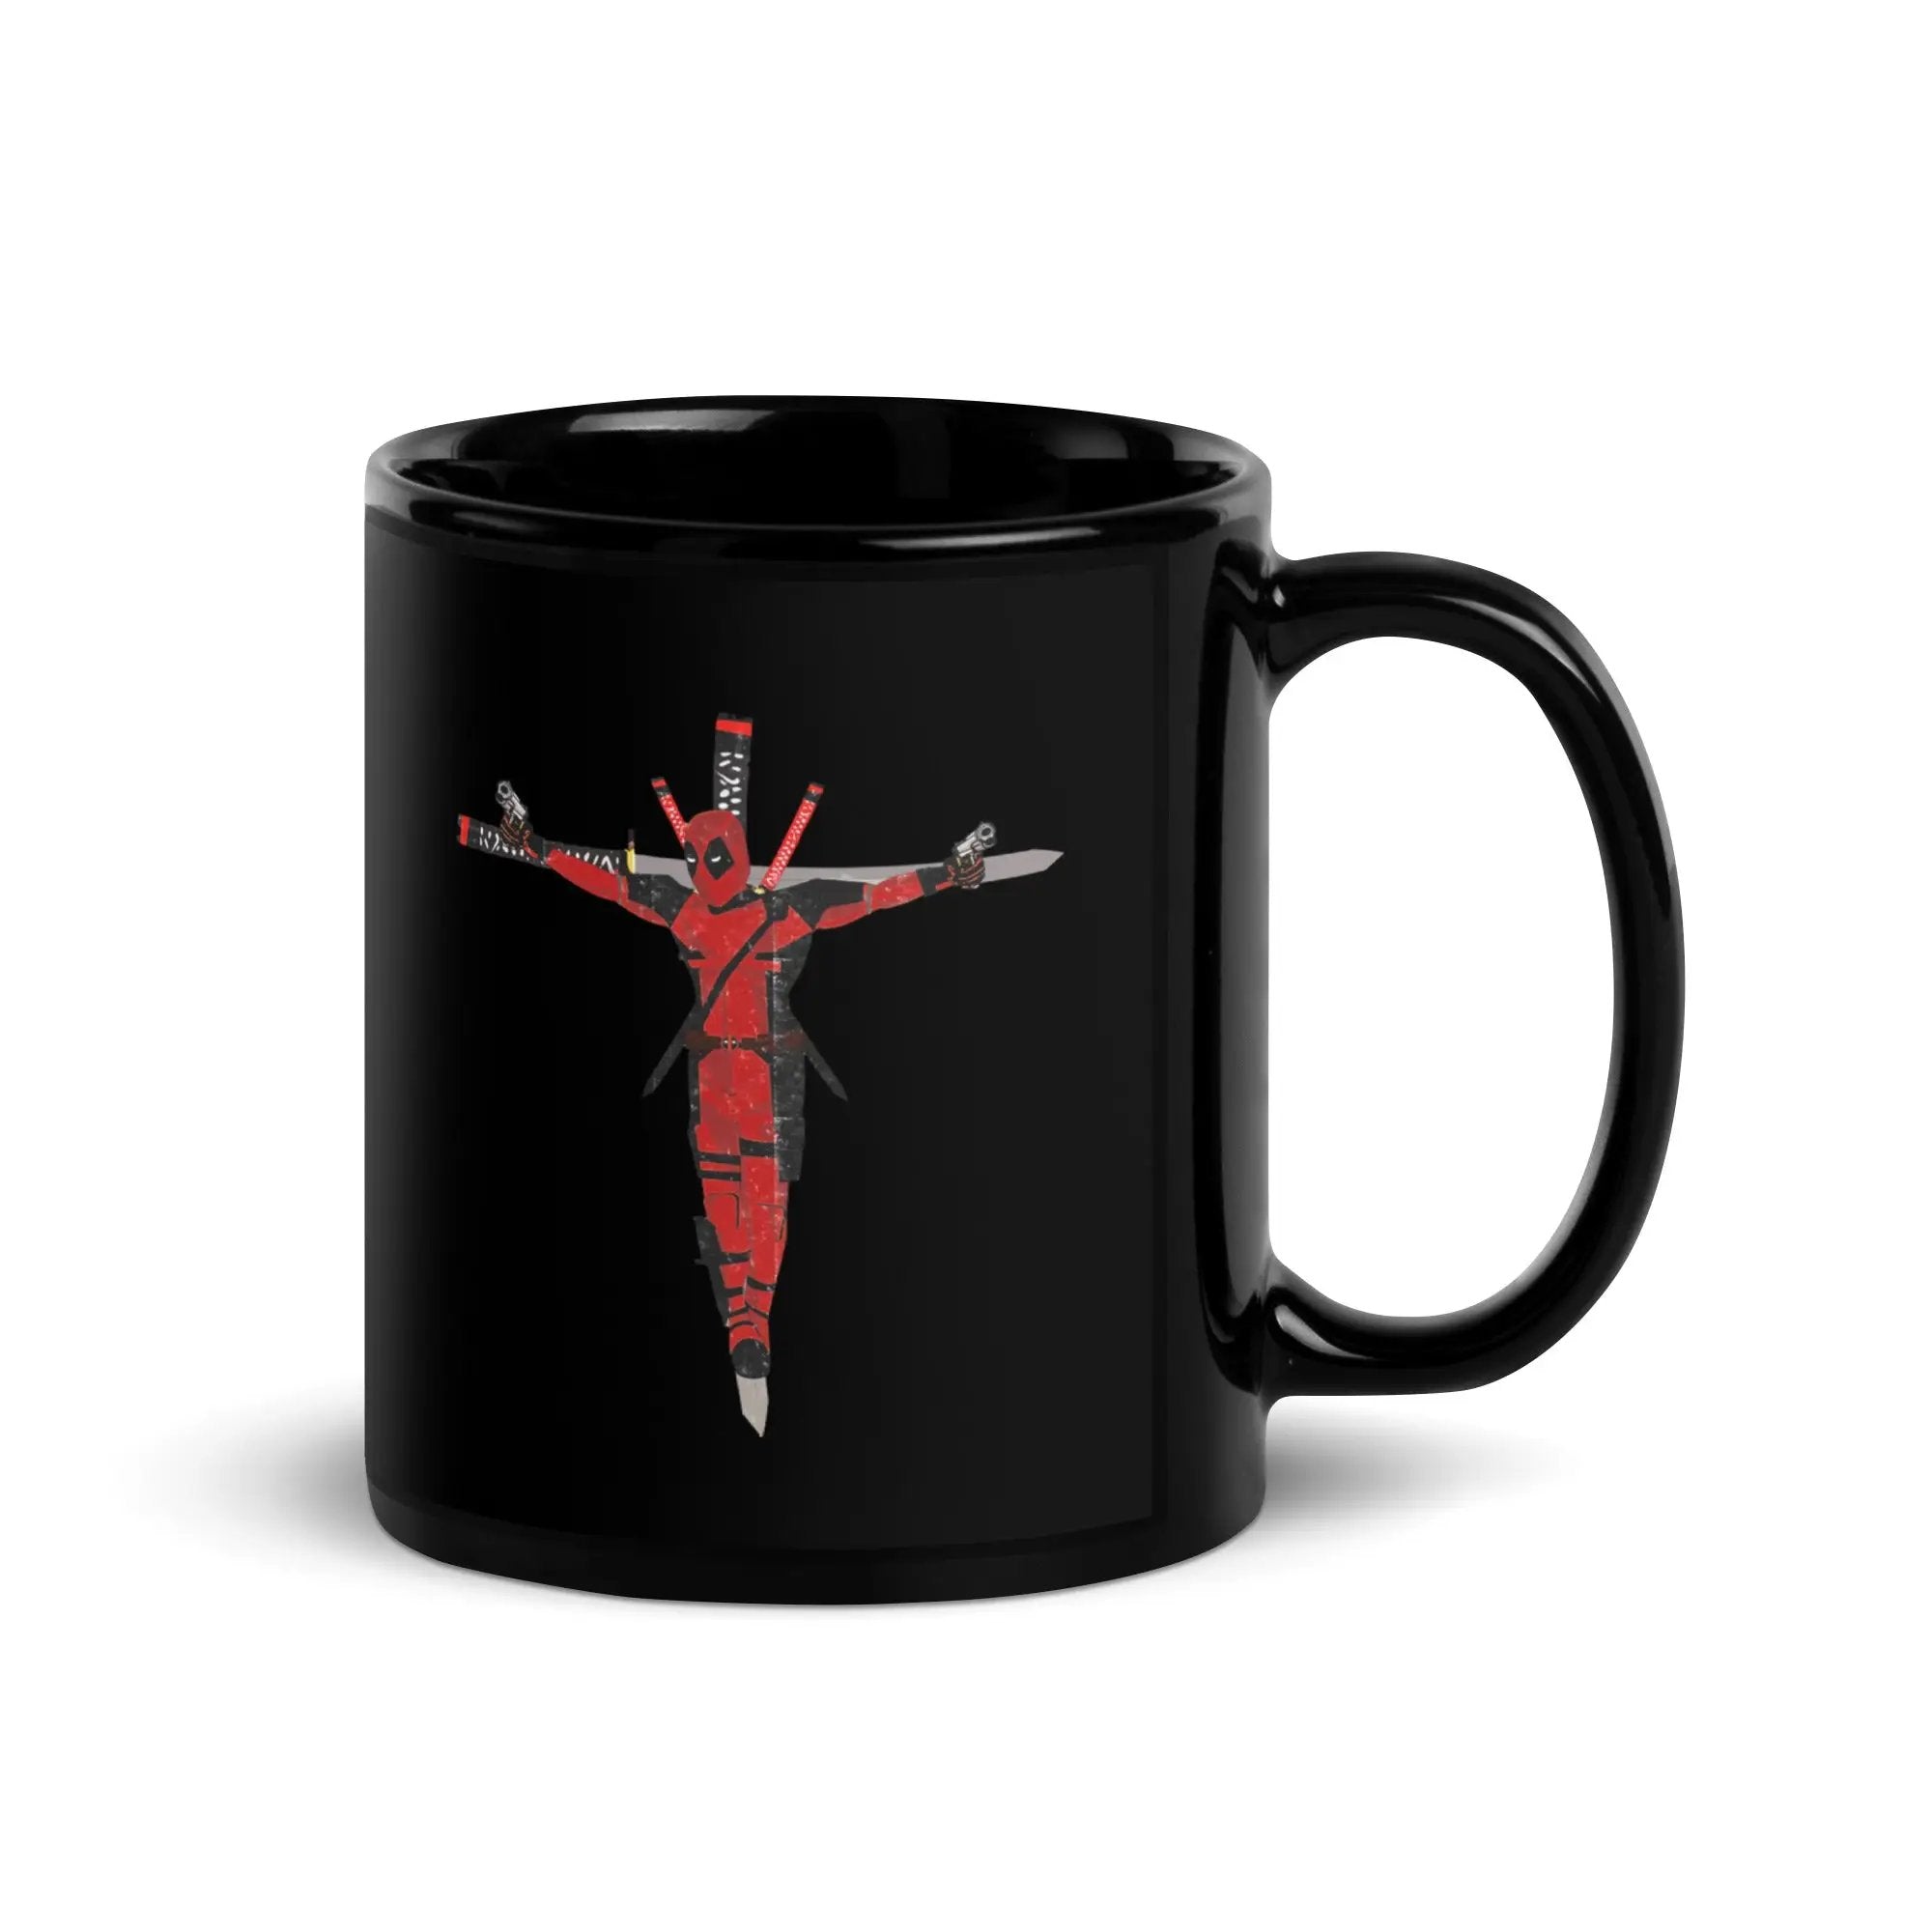 a black coffee mug with the image of jesus on it